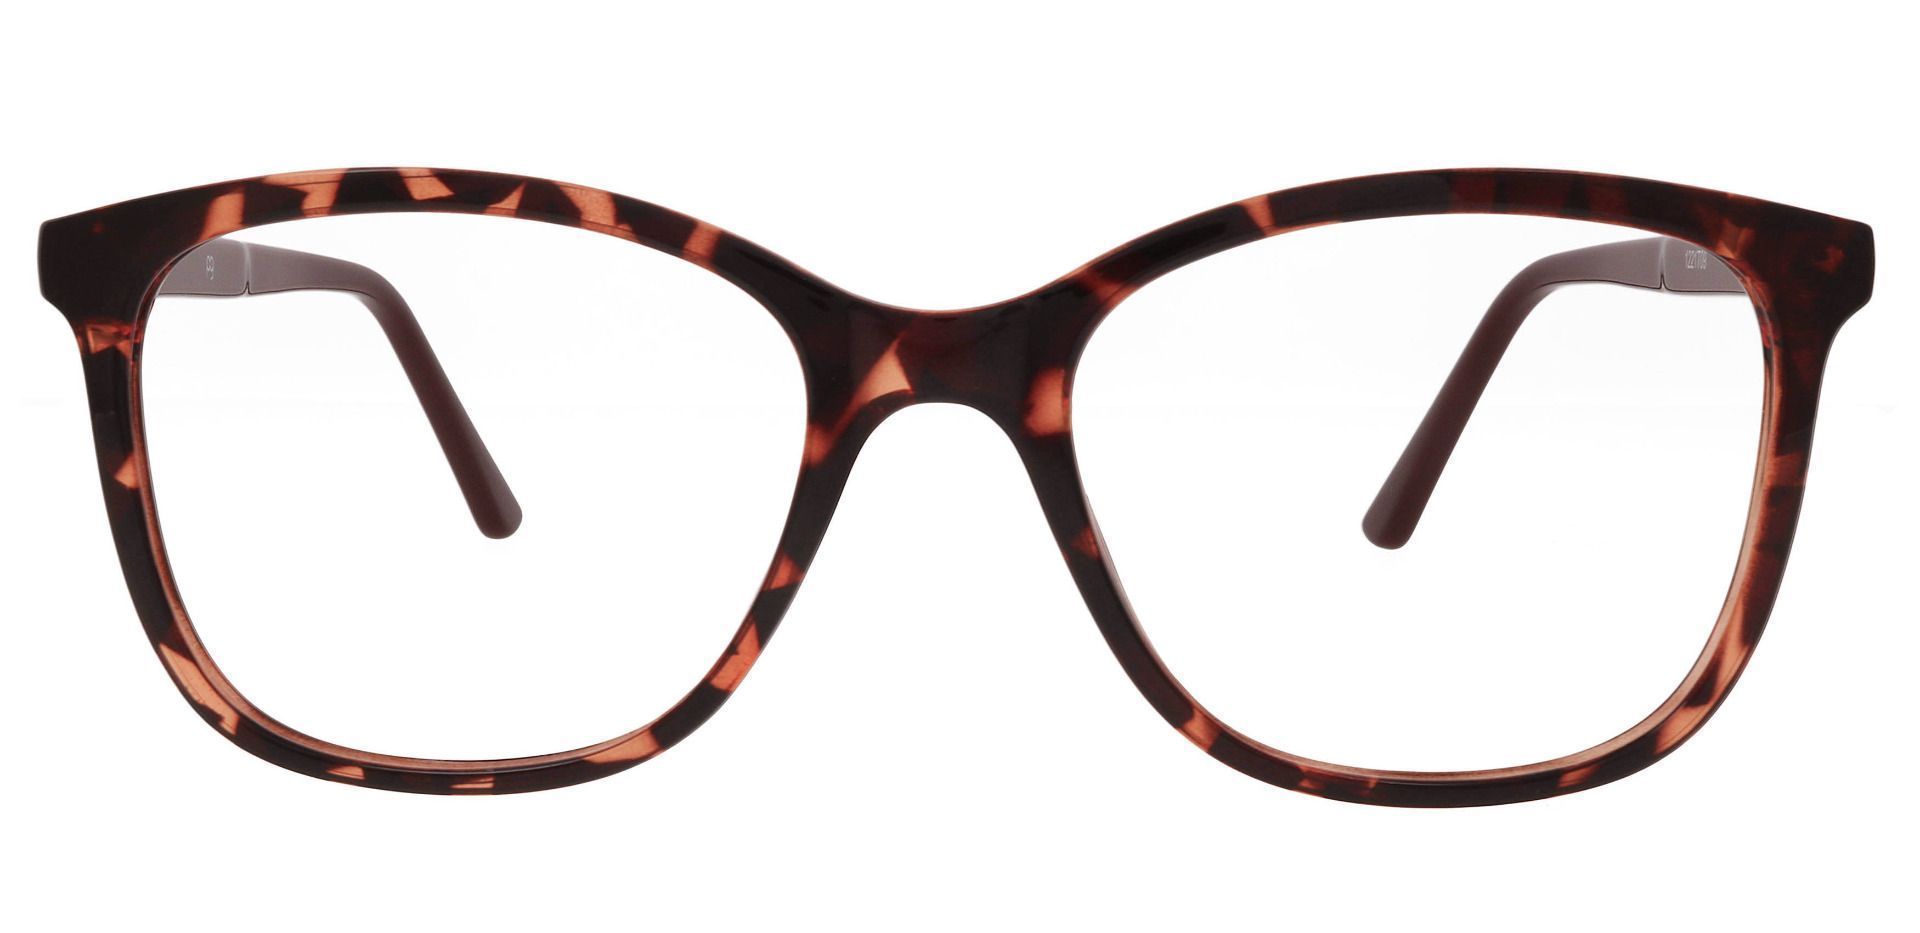 Halpin Square Prescription Glasses - Tortoise | Women's Eyeglasses ...